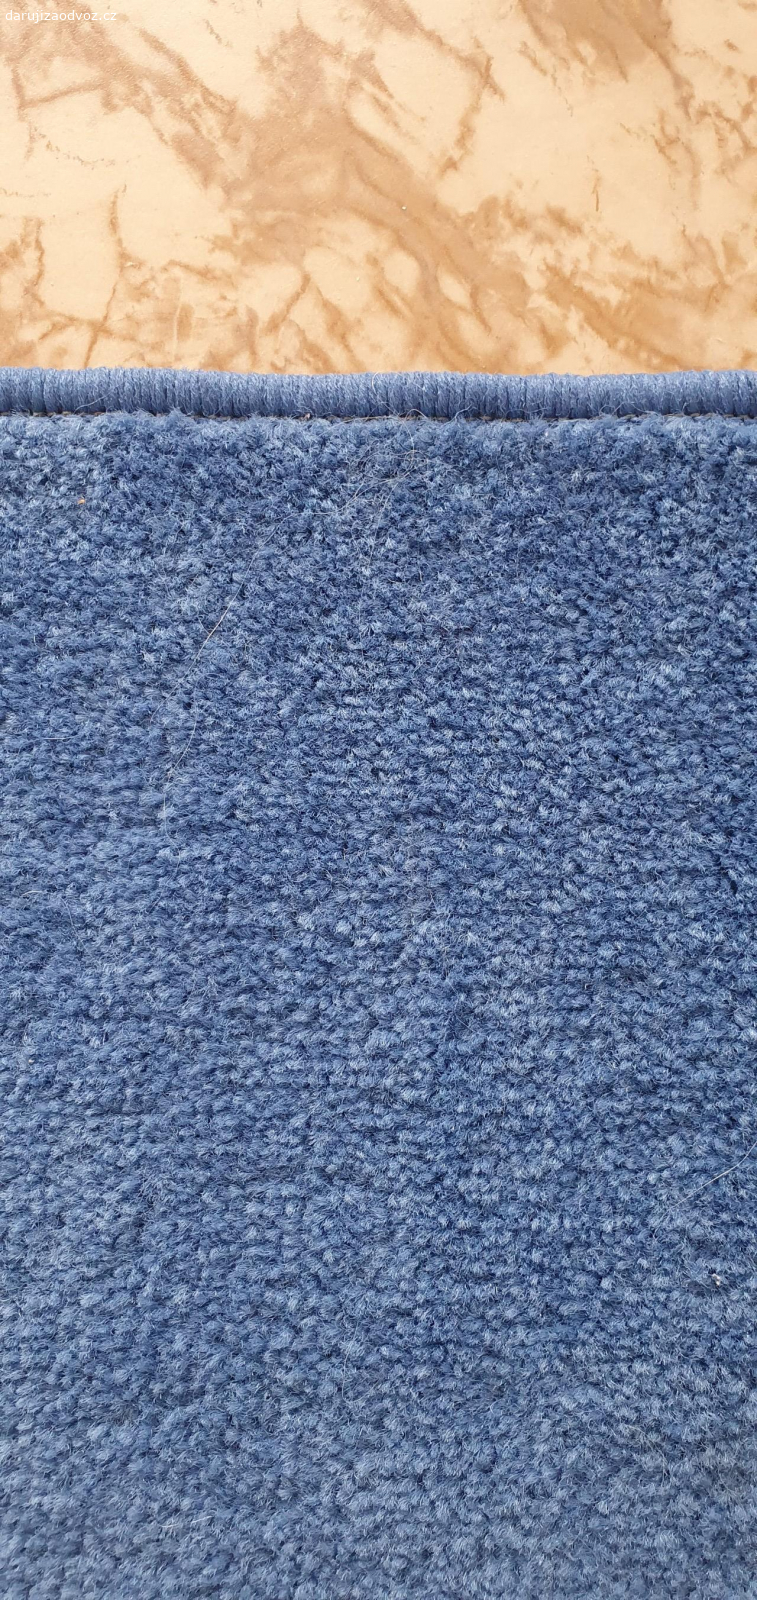 koberec kusový modrý. jednobarevný 4m x 2m